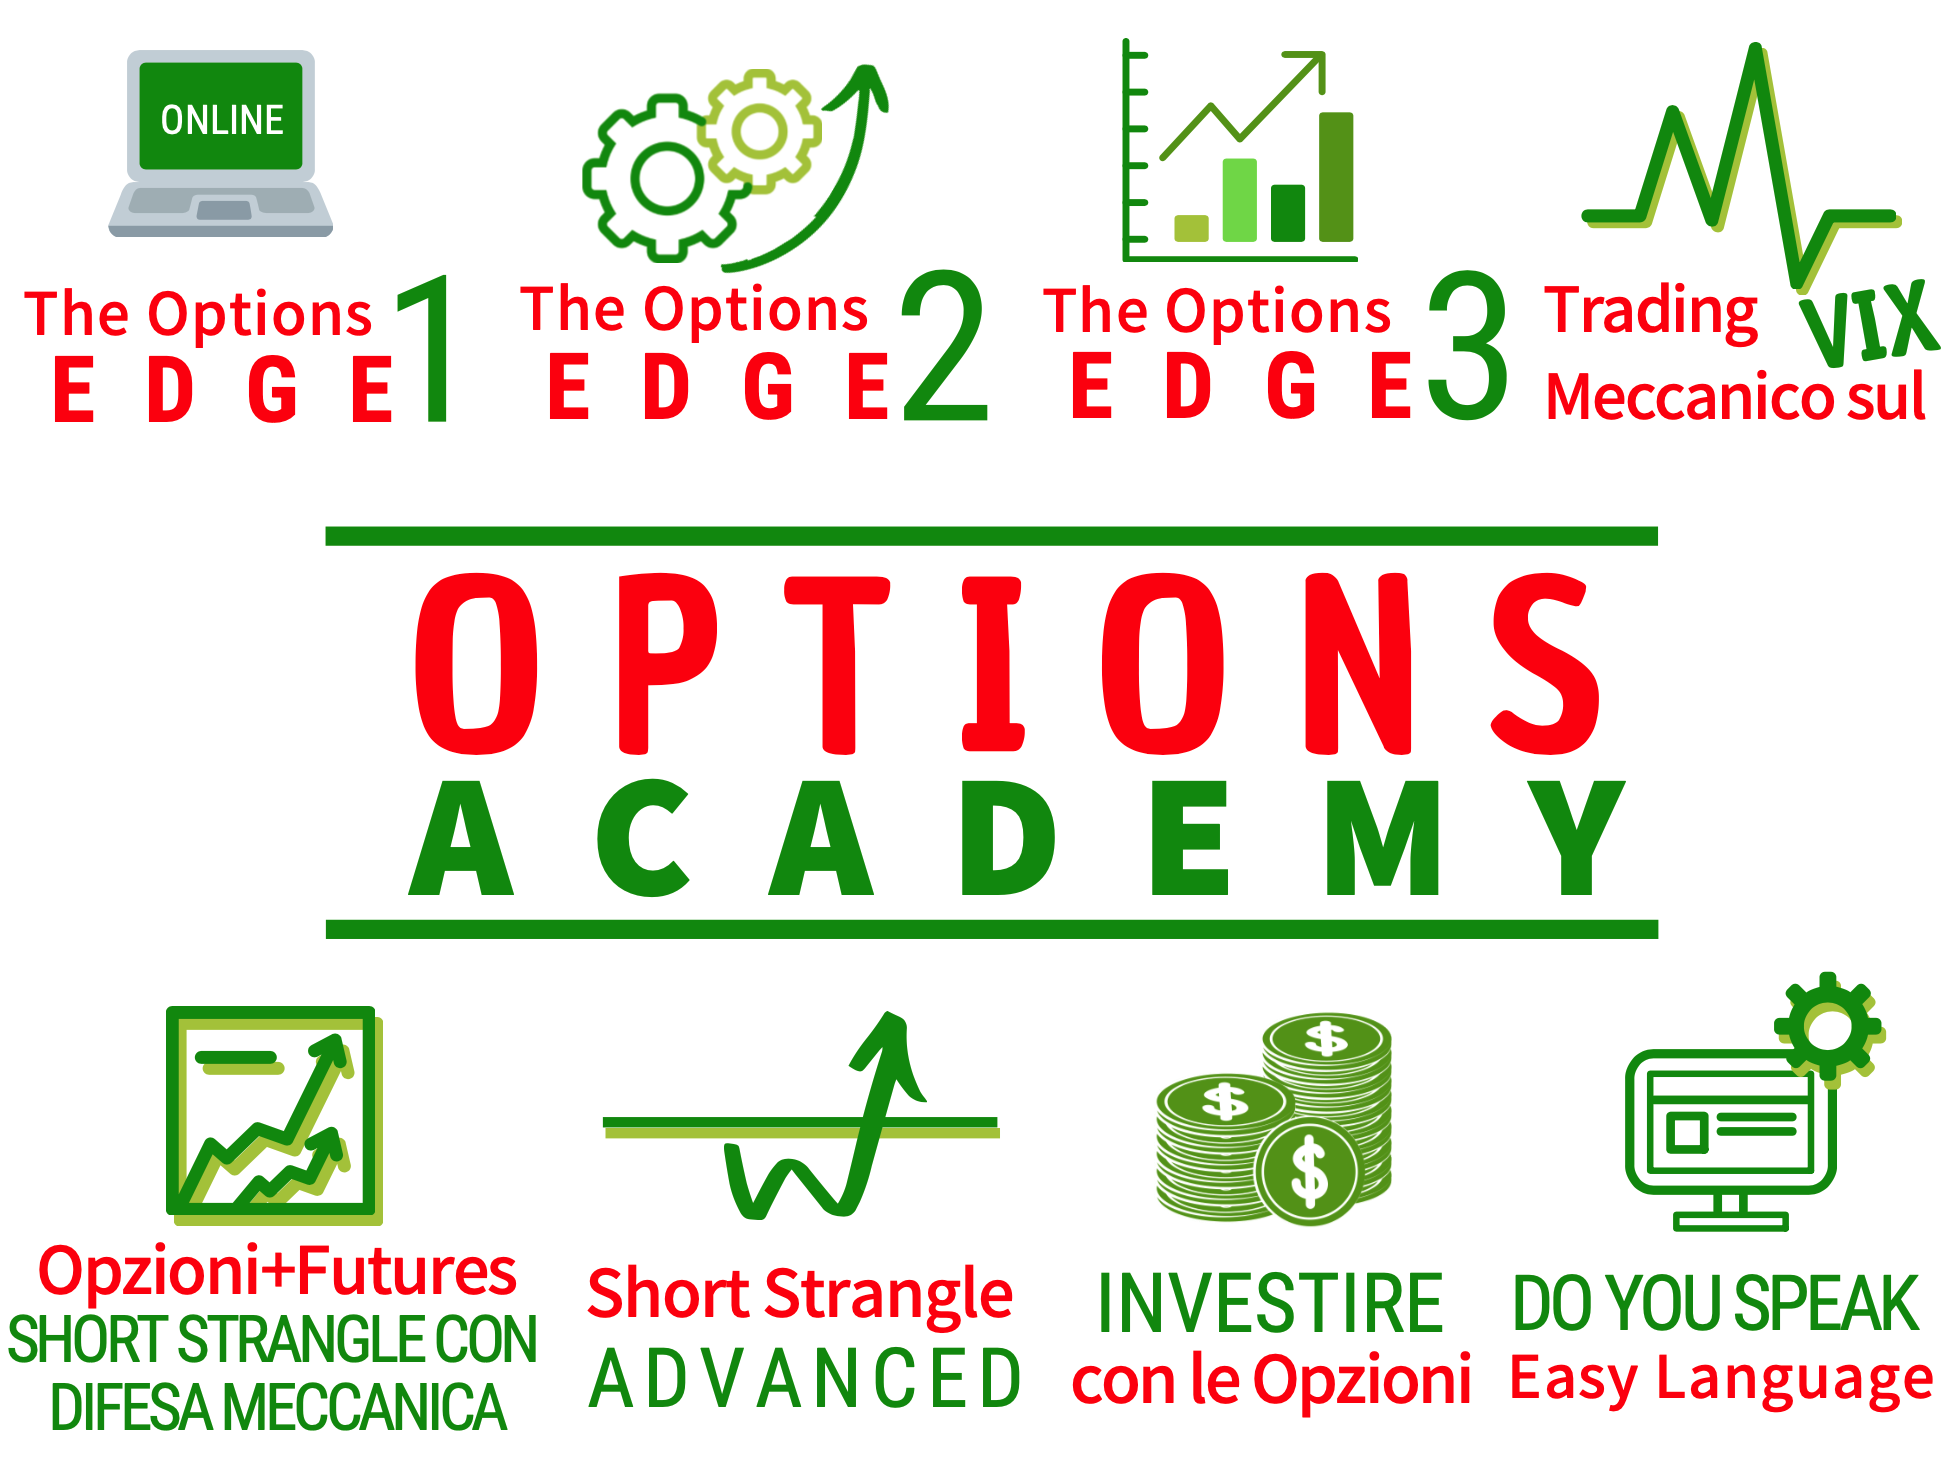 Options Academy